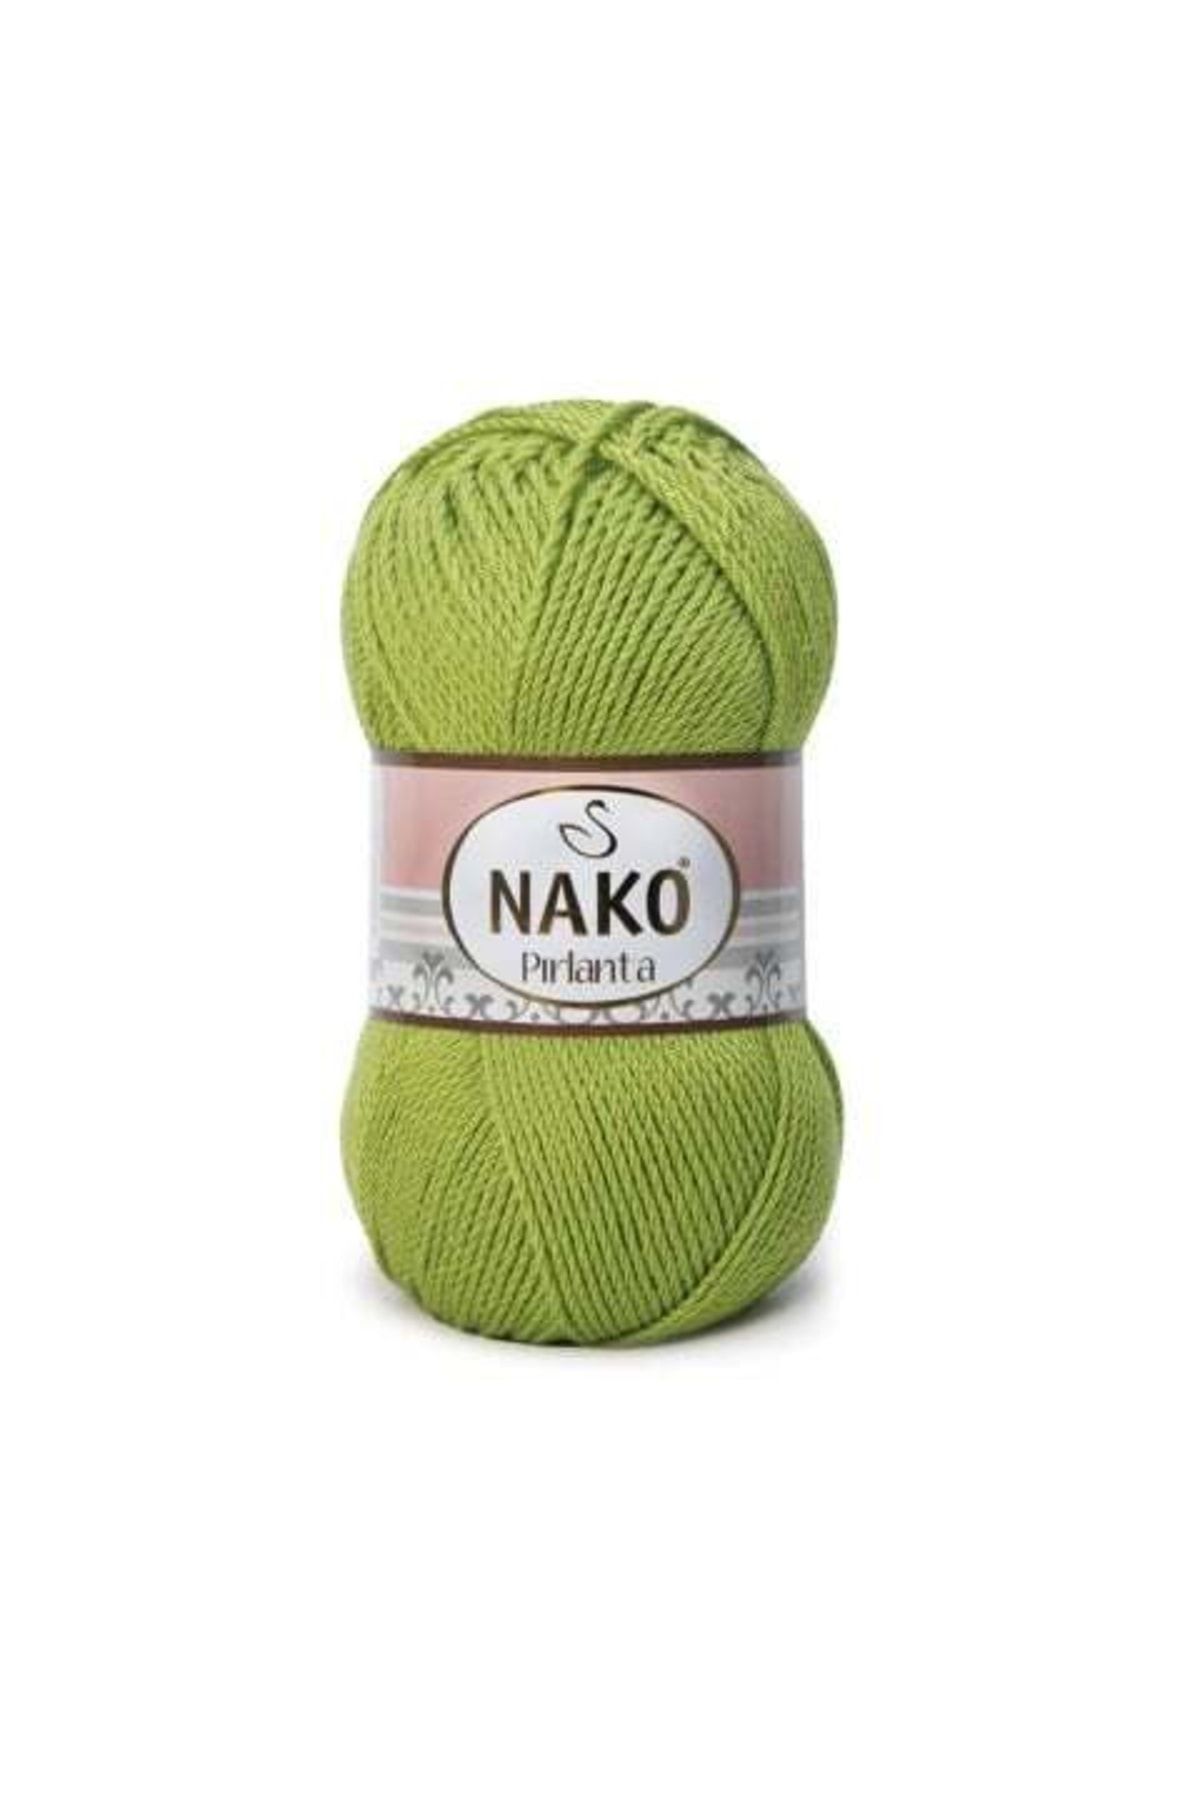 Nako Pırlanta 03330 5 Adet Amigurumi Ipi Fıstık Yeşili